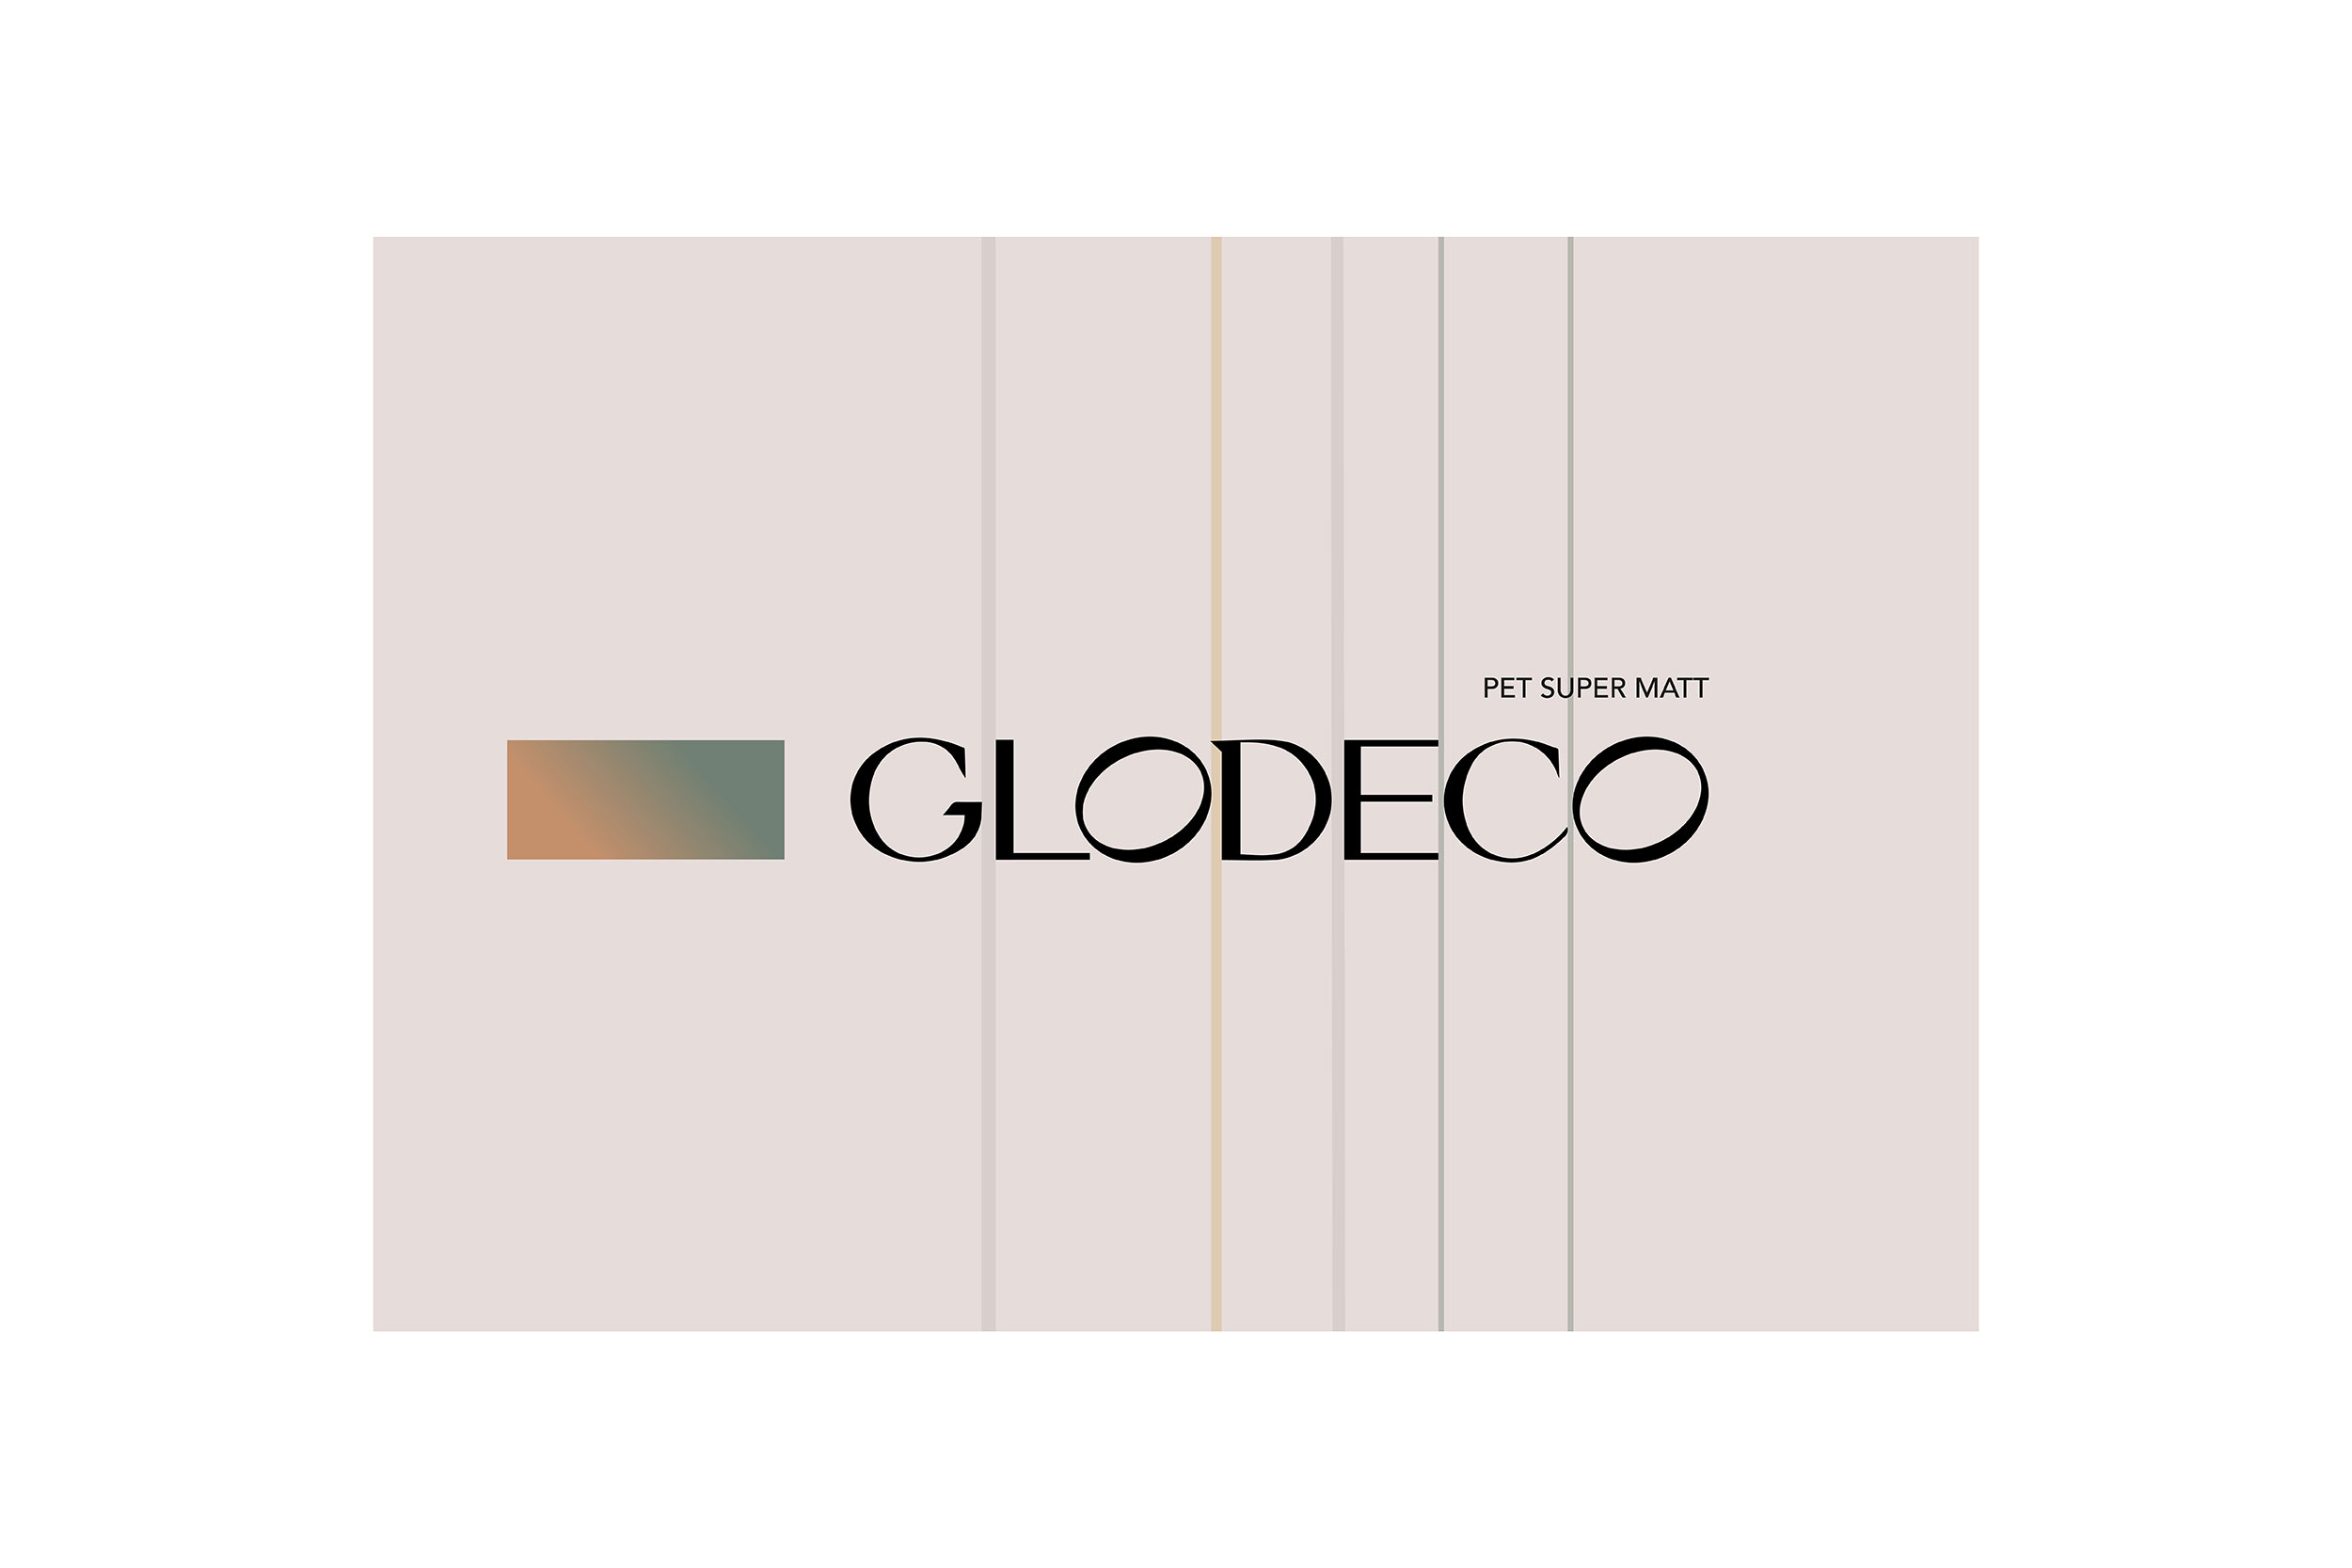 Разработка фирменного стиля для "Glodeco super matt